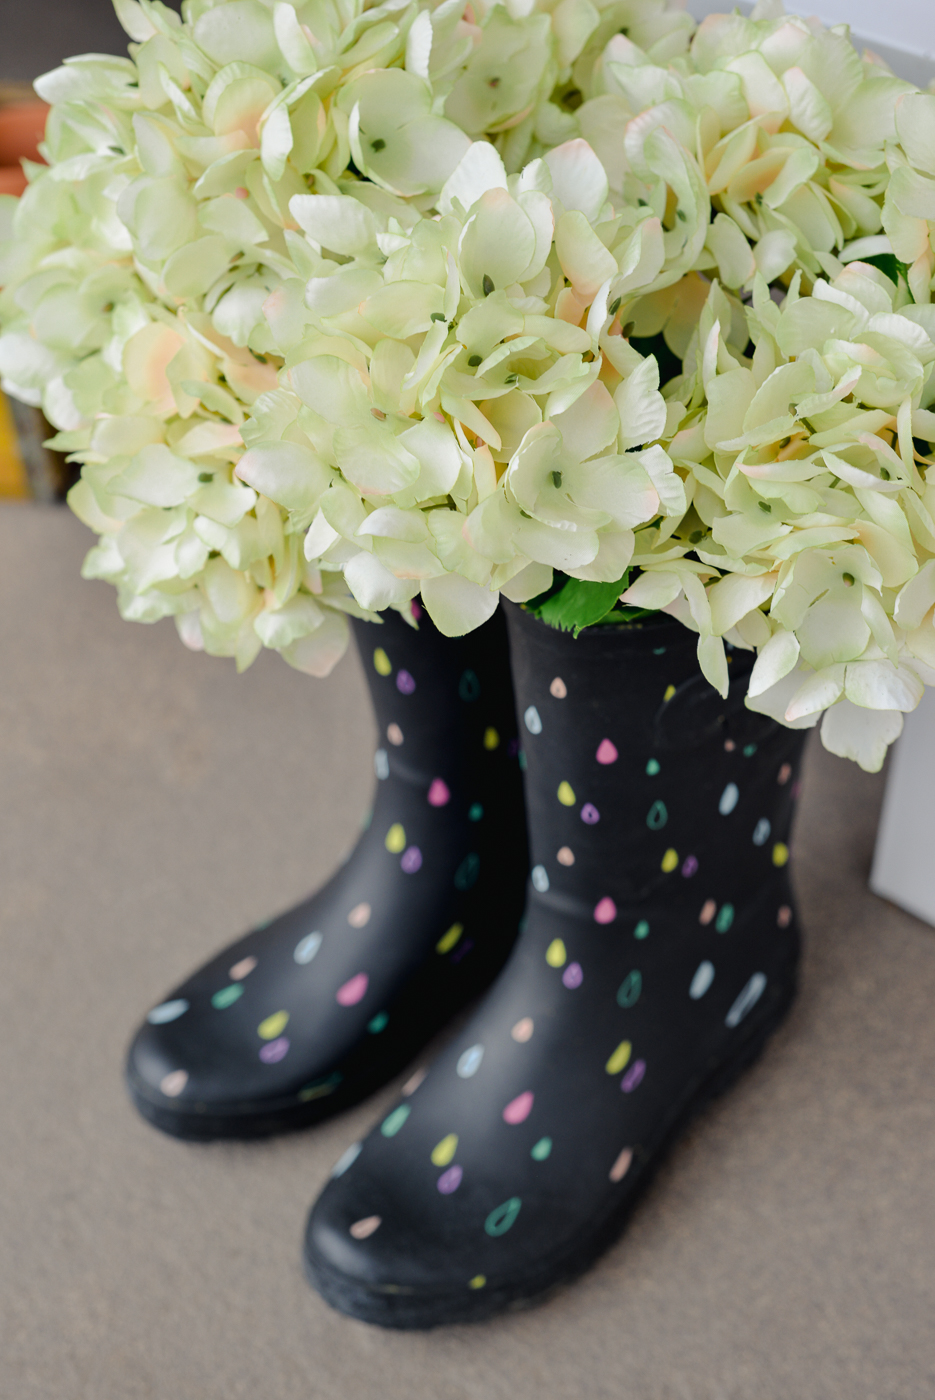 hydrangeas in rain boots